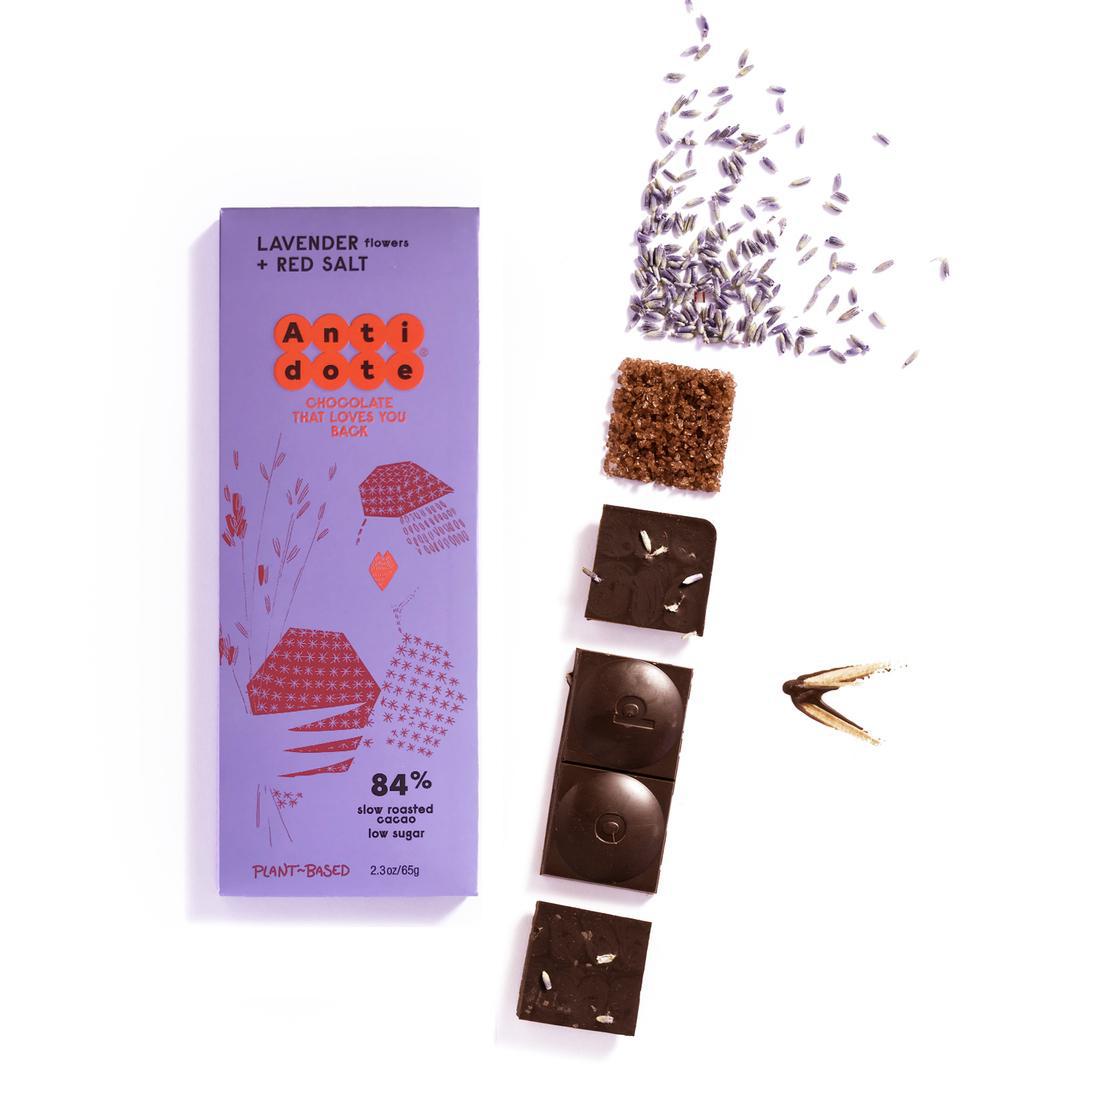 Antidote Chocolate - 'Lavender Flowers & Red Salt' Bar (65G | 84%)